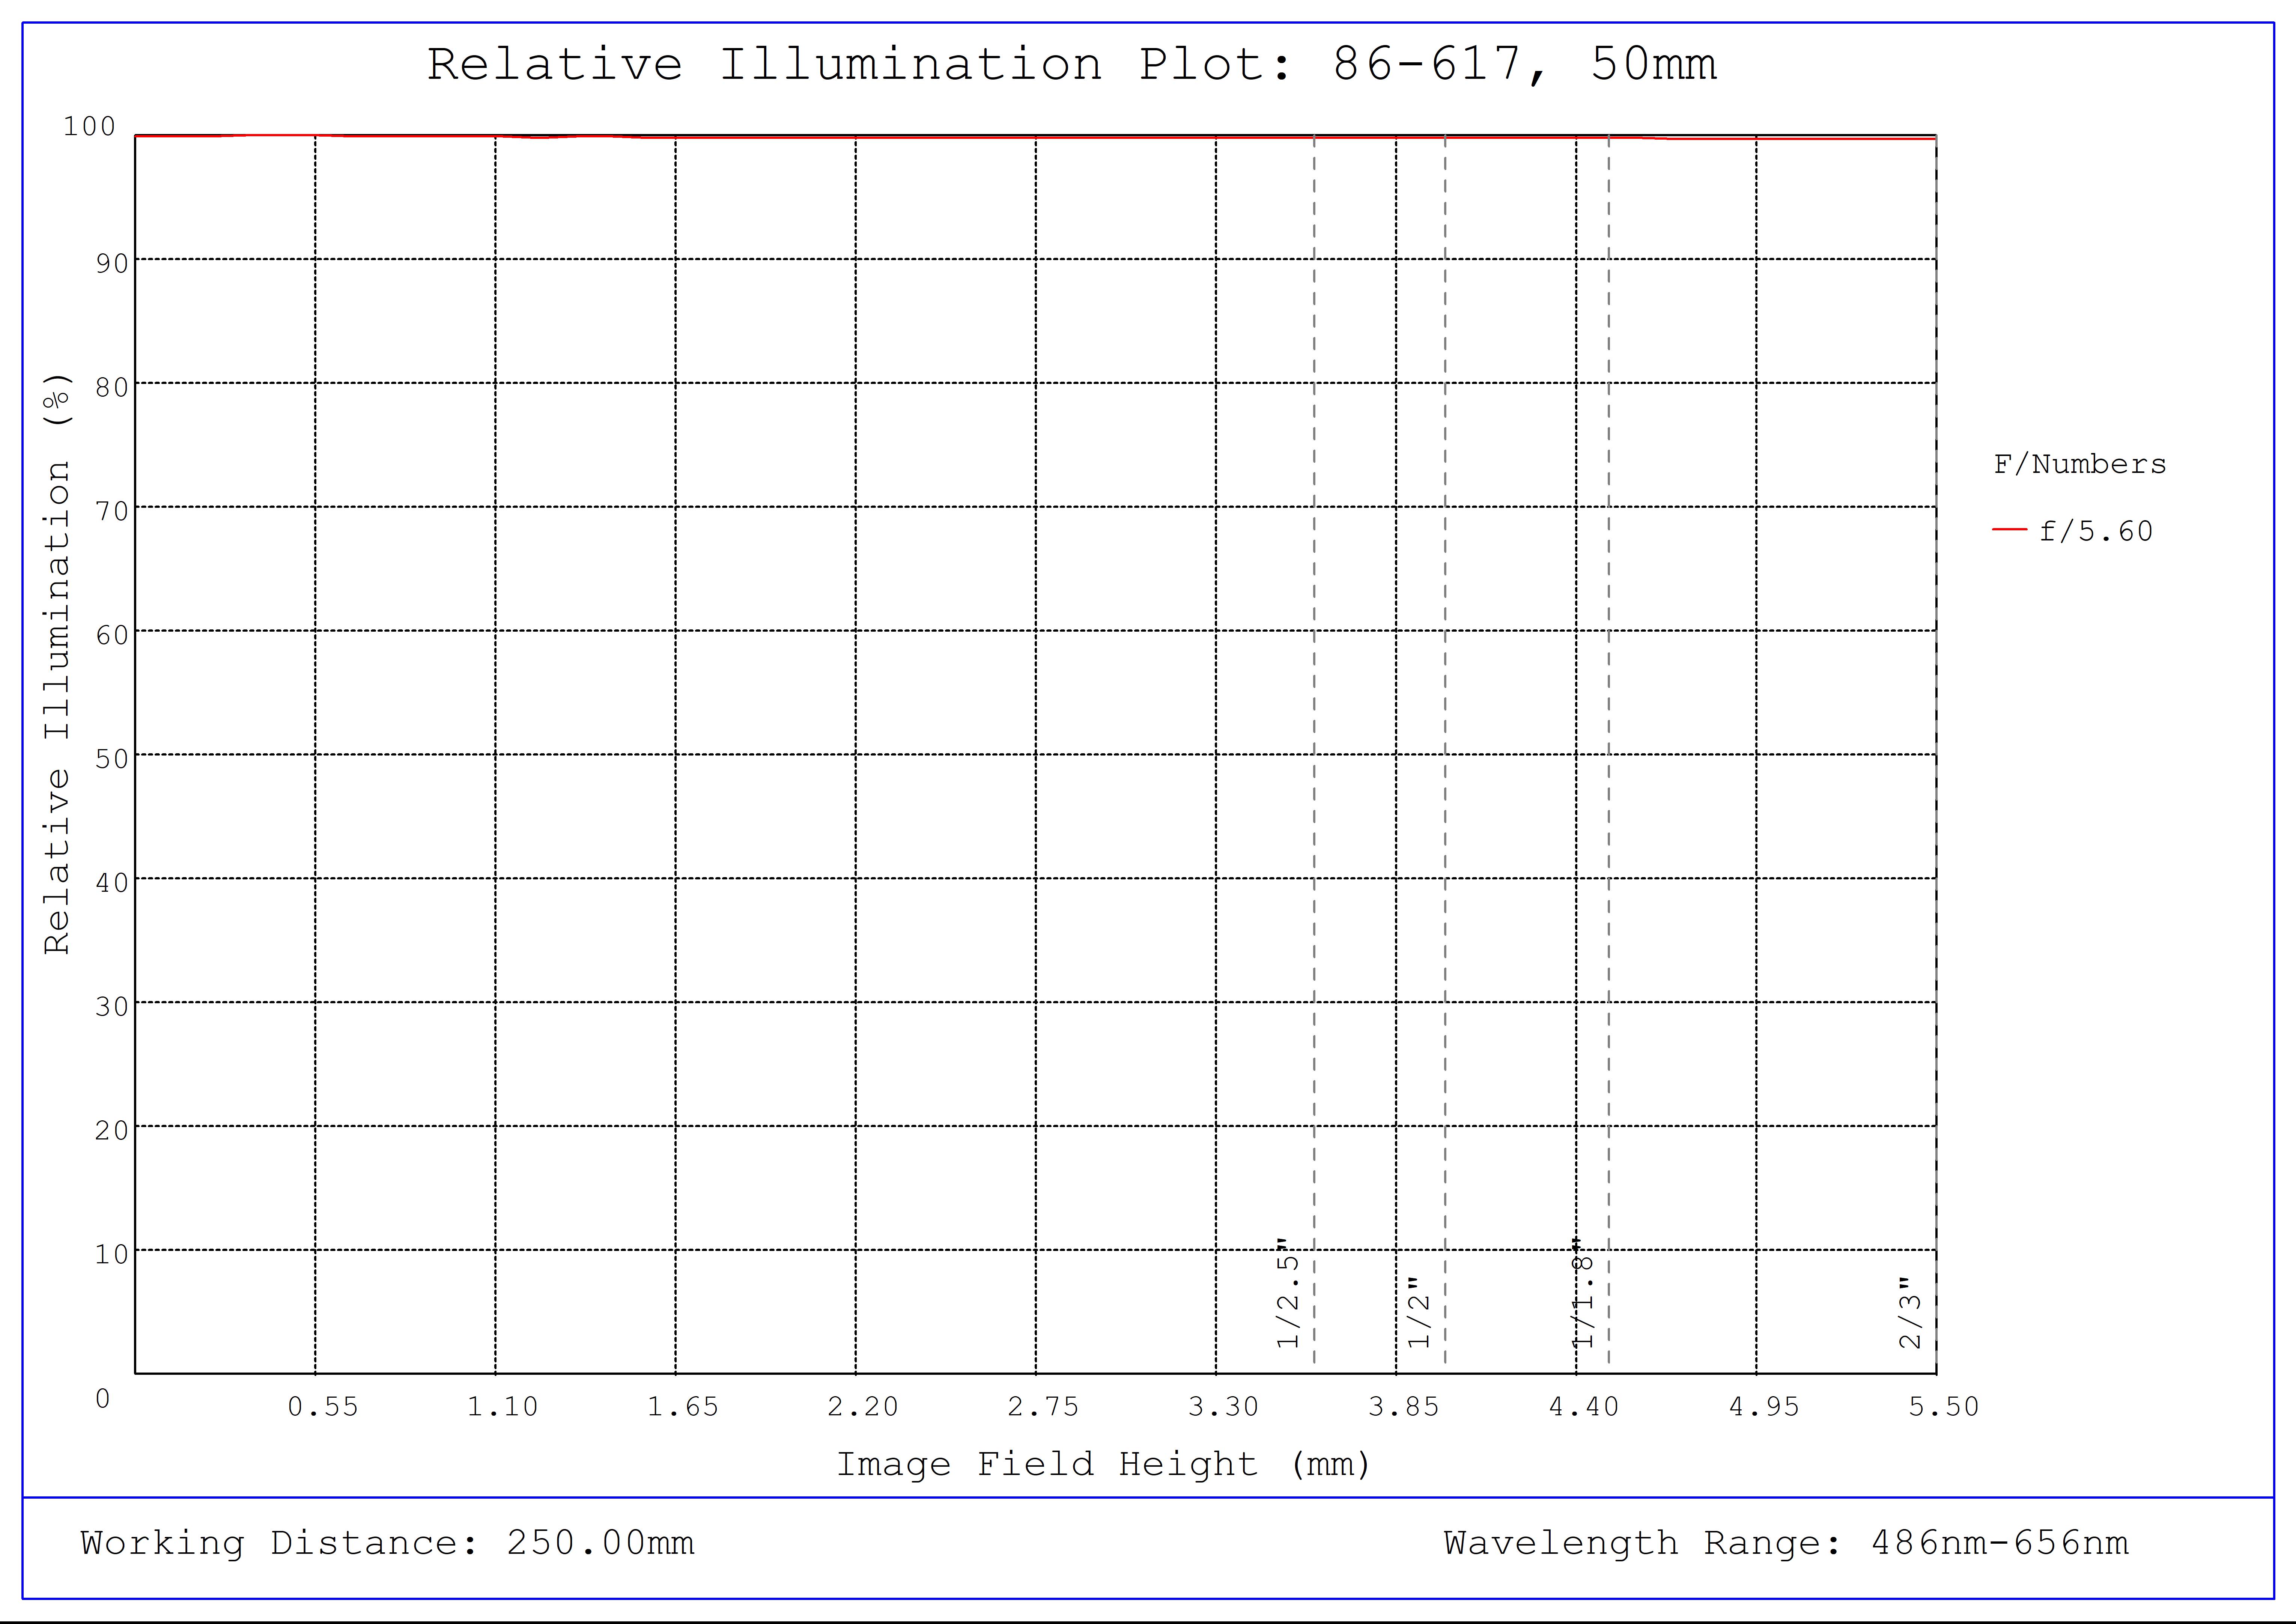 #86-617, 50mm, f/5.6 Ci Series Fixed Focal Length Lens, Relative Illumination Plot